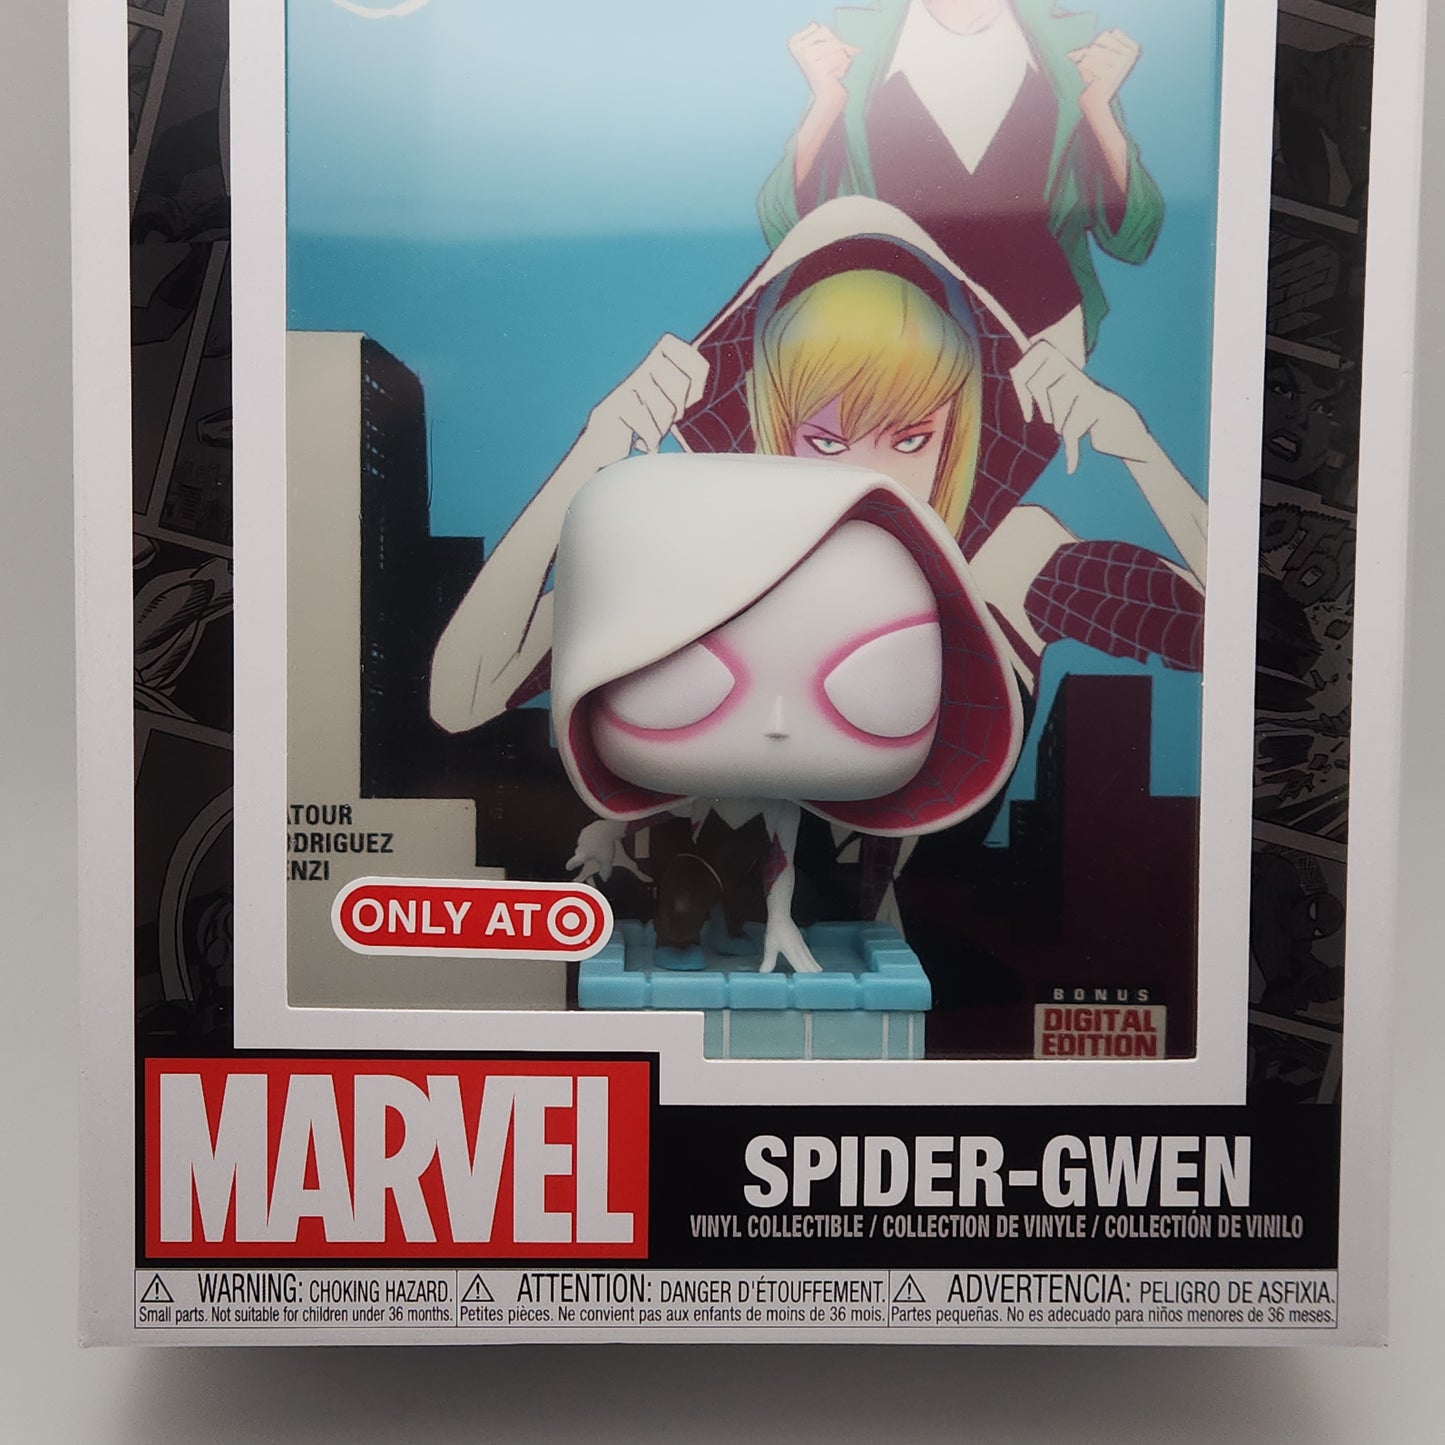 Funko Pop! Comic Covers- Marvel: Spider-Gwen